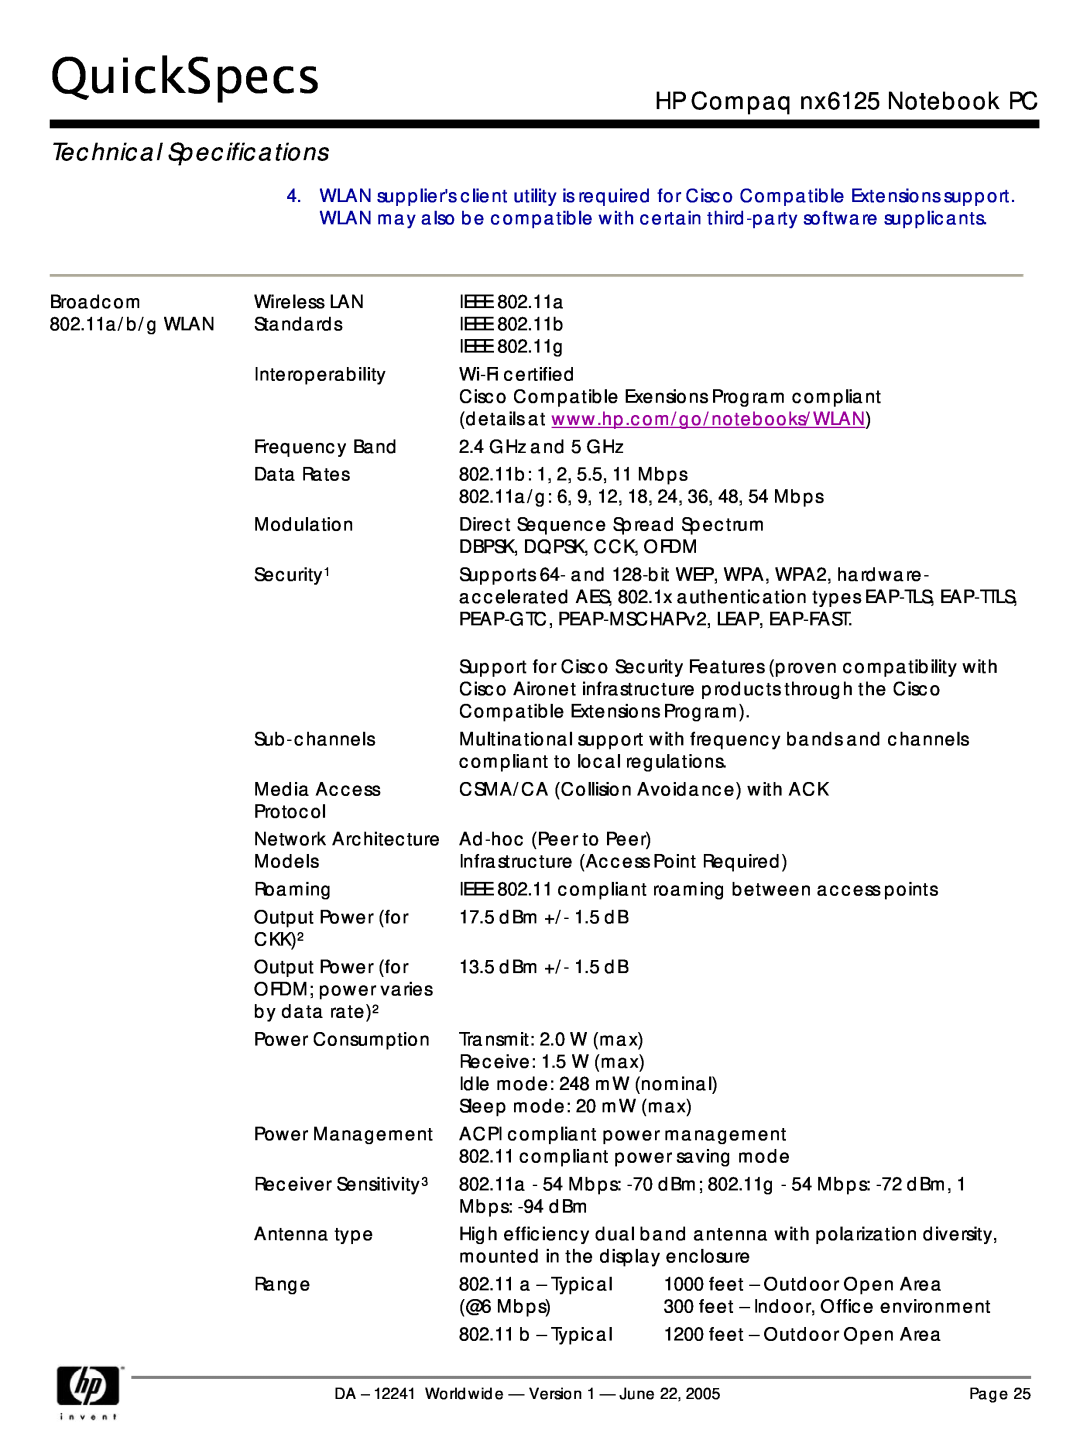 AMD DA - 12241 manual QuickSpecs, HP Compaq nx6125 Notebook PC, Technical Specifications 